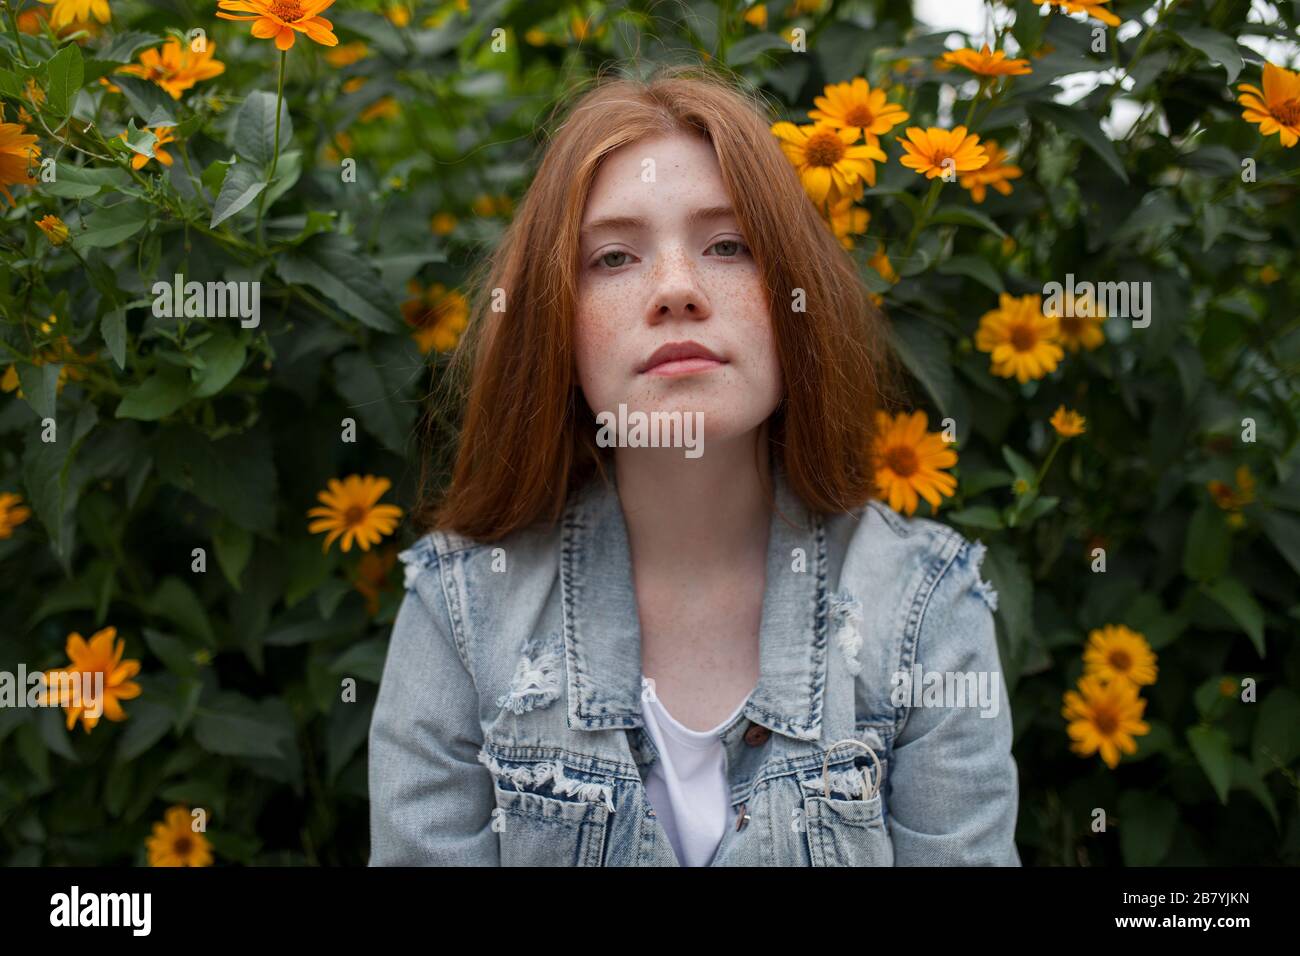 Teenage girl by bush with orange flowers Stock Photo